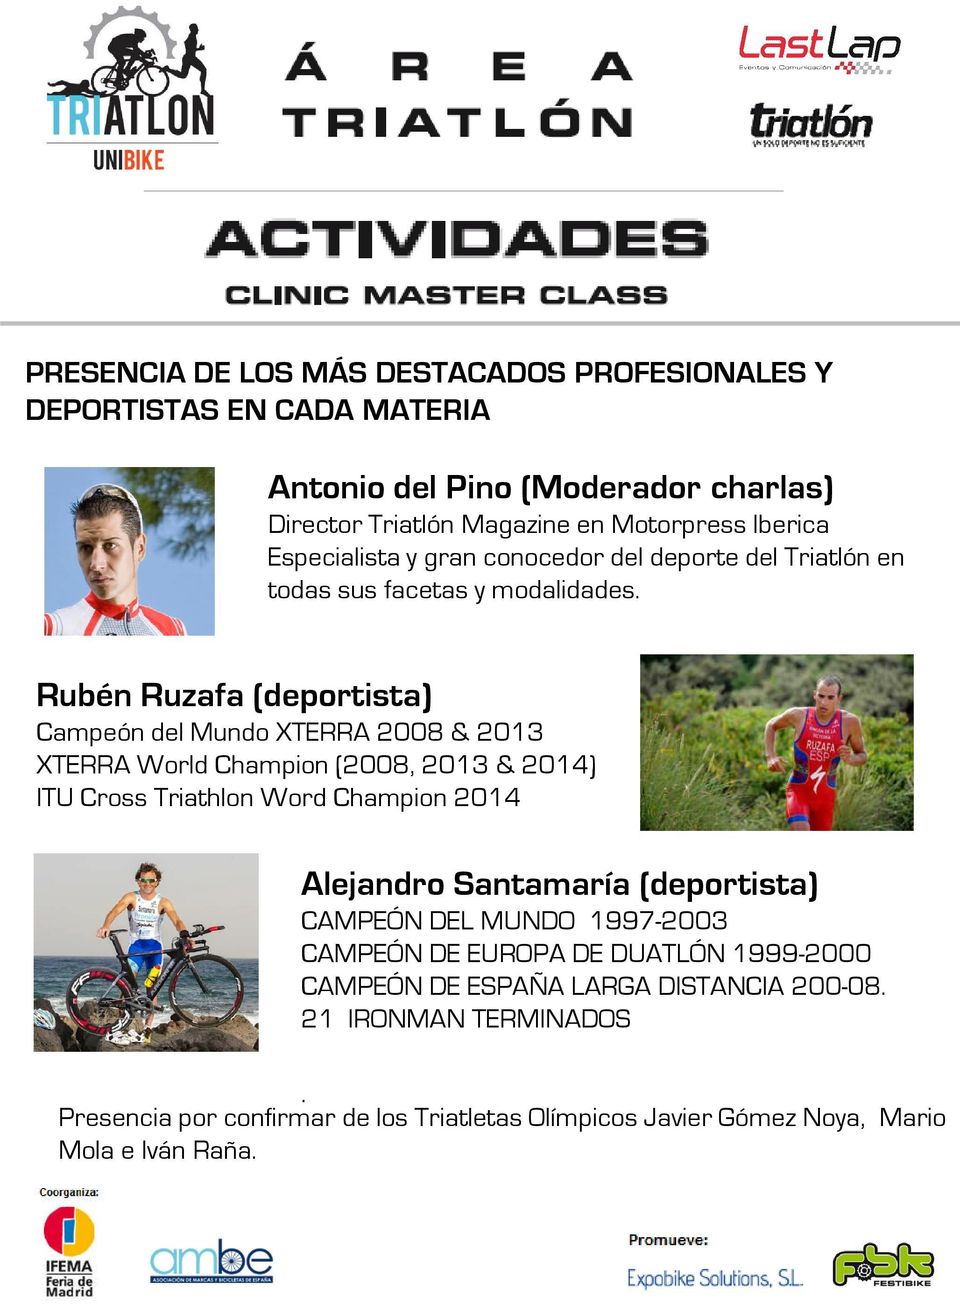 Rubén Ruzafa (deportista) Campeón del Mundo XTERRA 2008 & 2013 XTERRA World Champion (2008, 2013 & 2014) ITU Cross Triathlon Word Champion 2014 Alejandro Santamaría